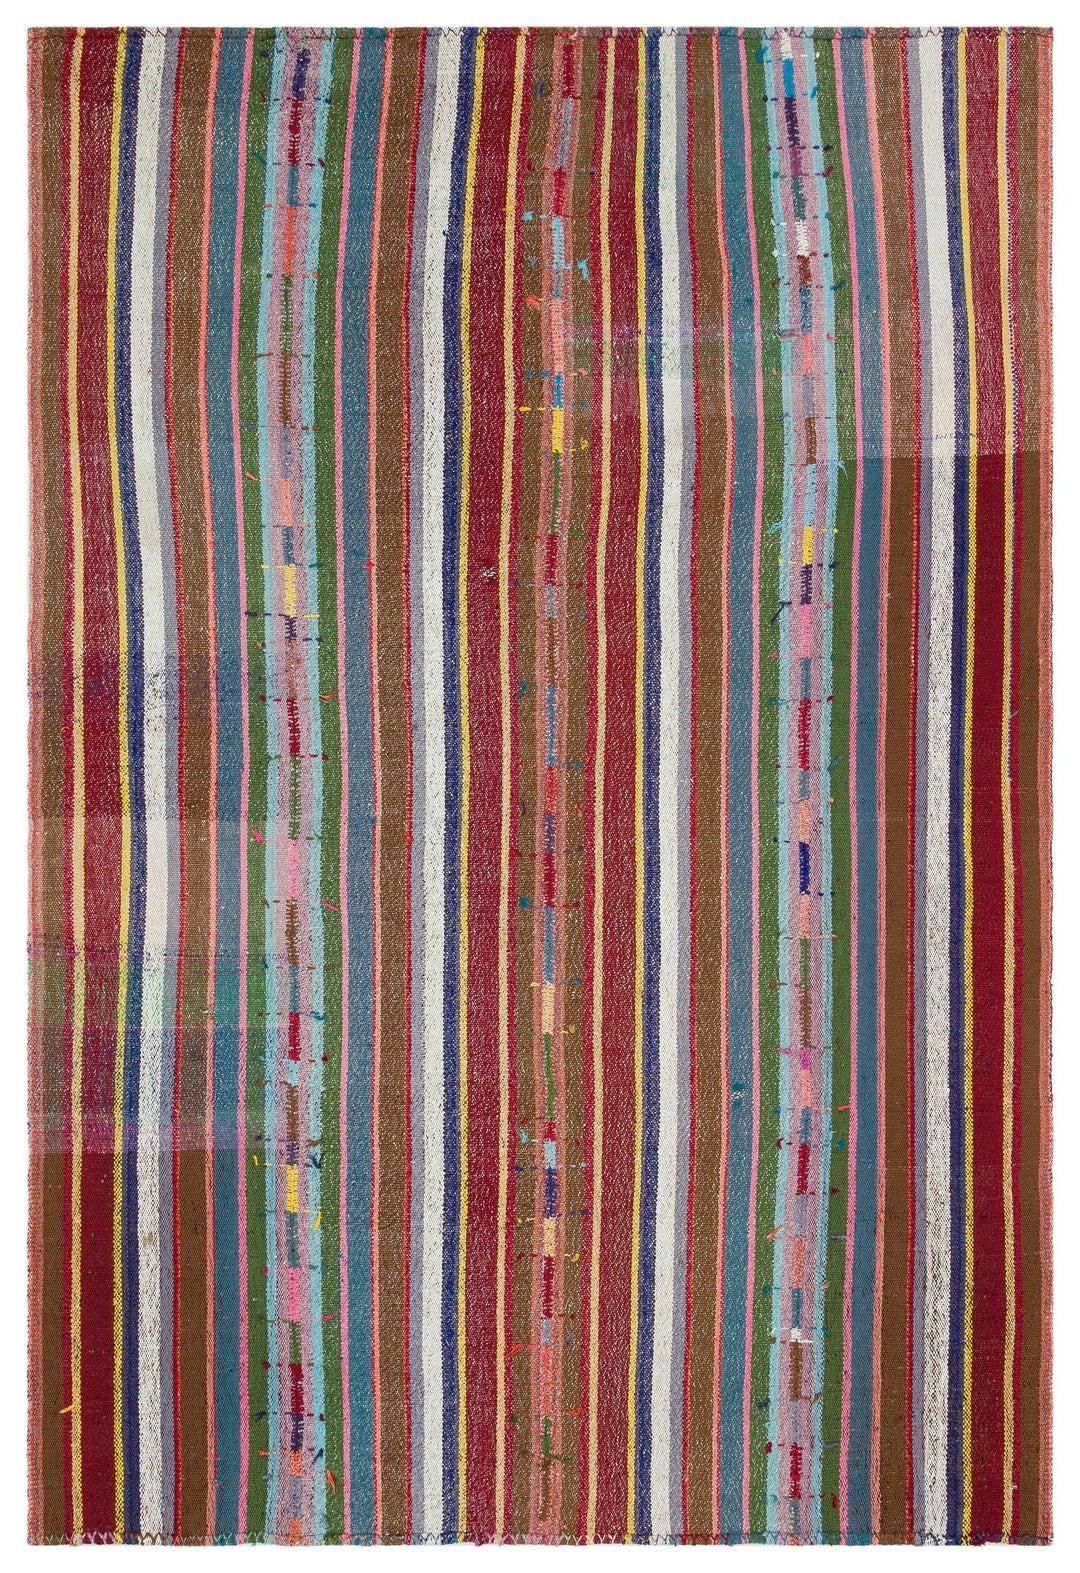 Cretan Beige Striped Wool Hand-Woven Rug 177 x 258